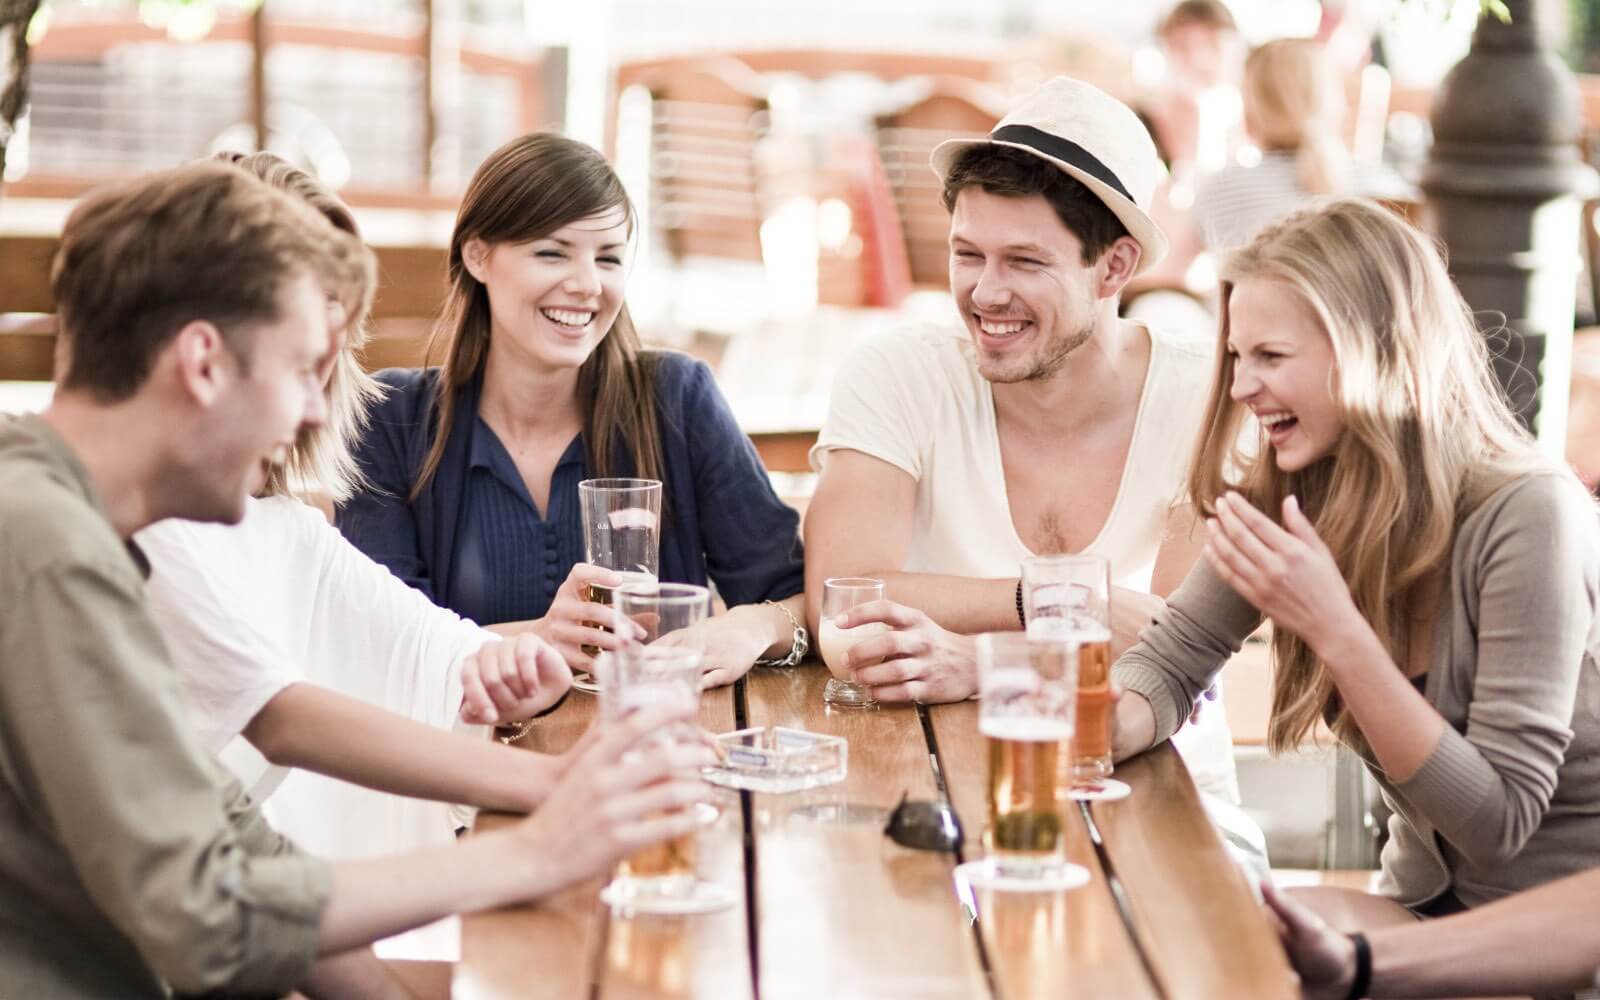 Let's Meet Pub Quiz Dating Events: Brainpower and Bonding